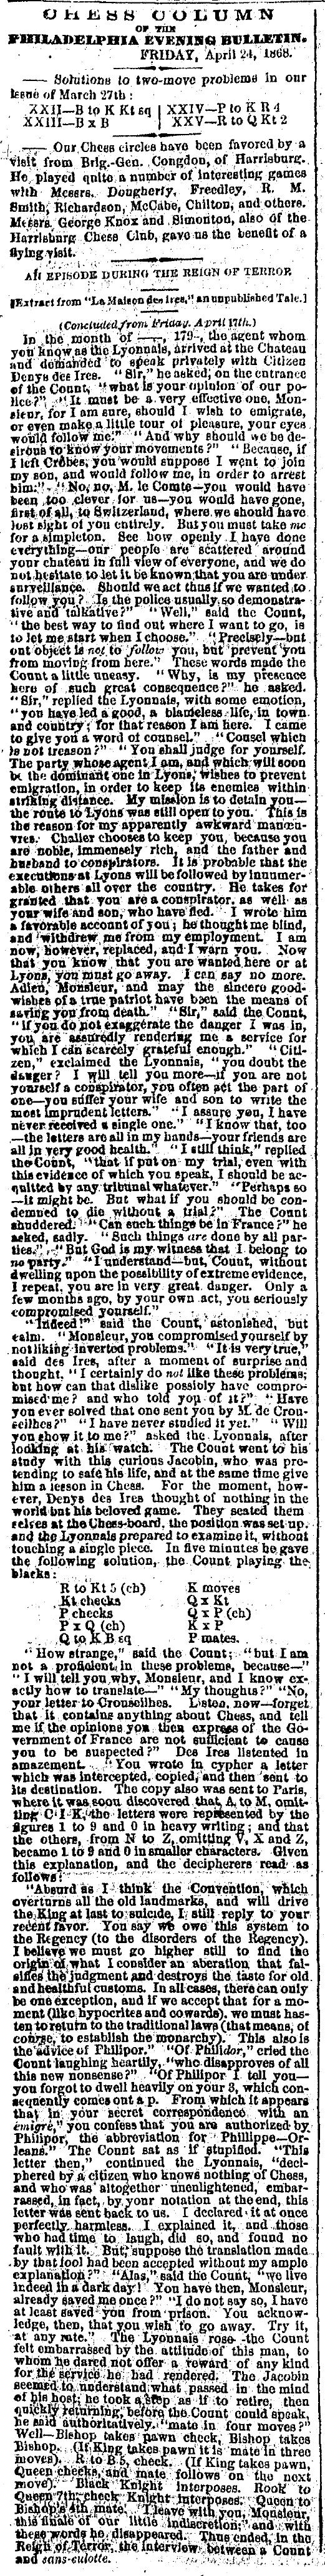 1868.04.24-01 Philadelphia Daily Evening Bulletin.jpg